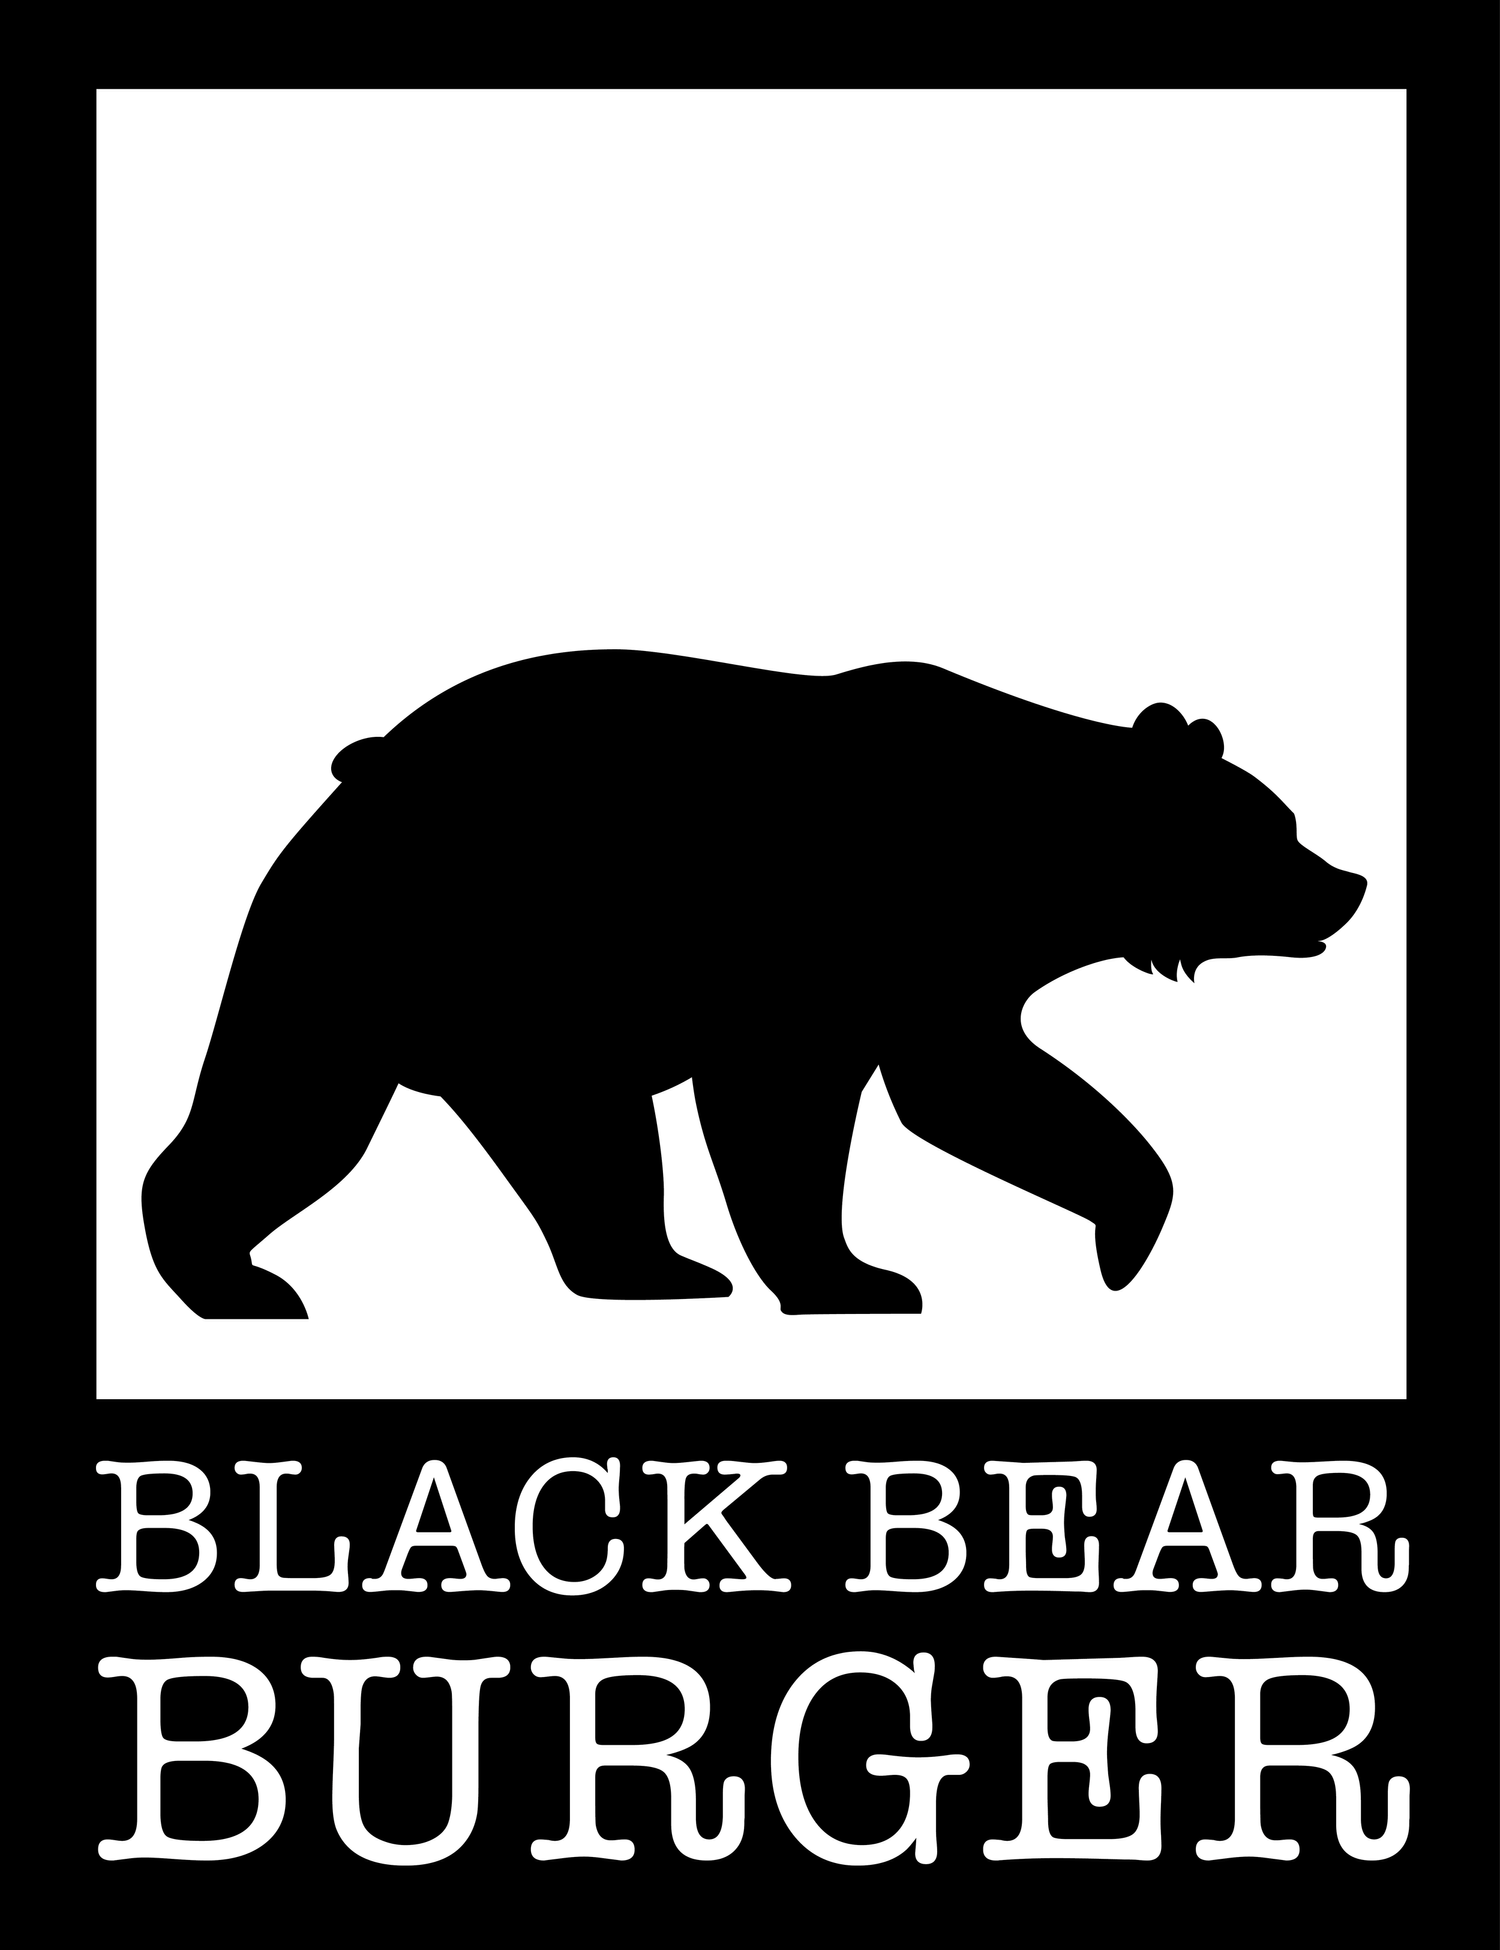 Black Bear Burger